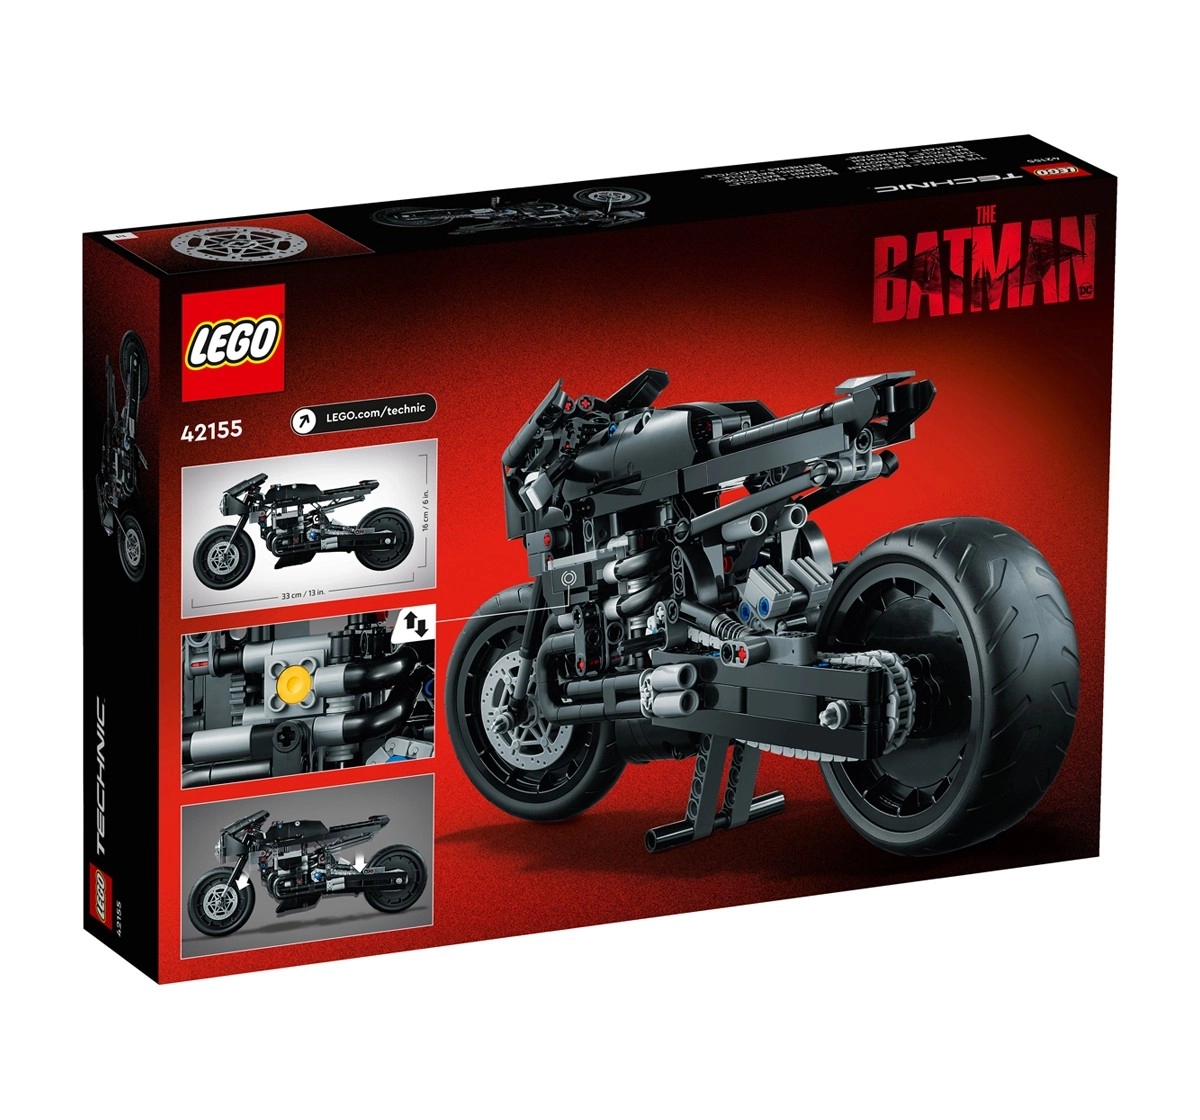 LEGO Technic THE BATMAN  BATCYCLE 42155 Building Toy Set 641 Pieces Multicolour 9Y+